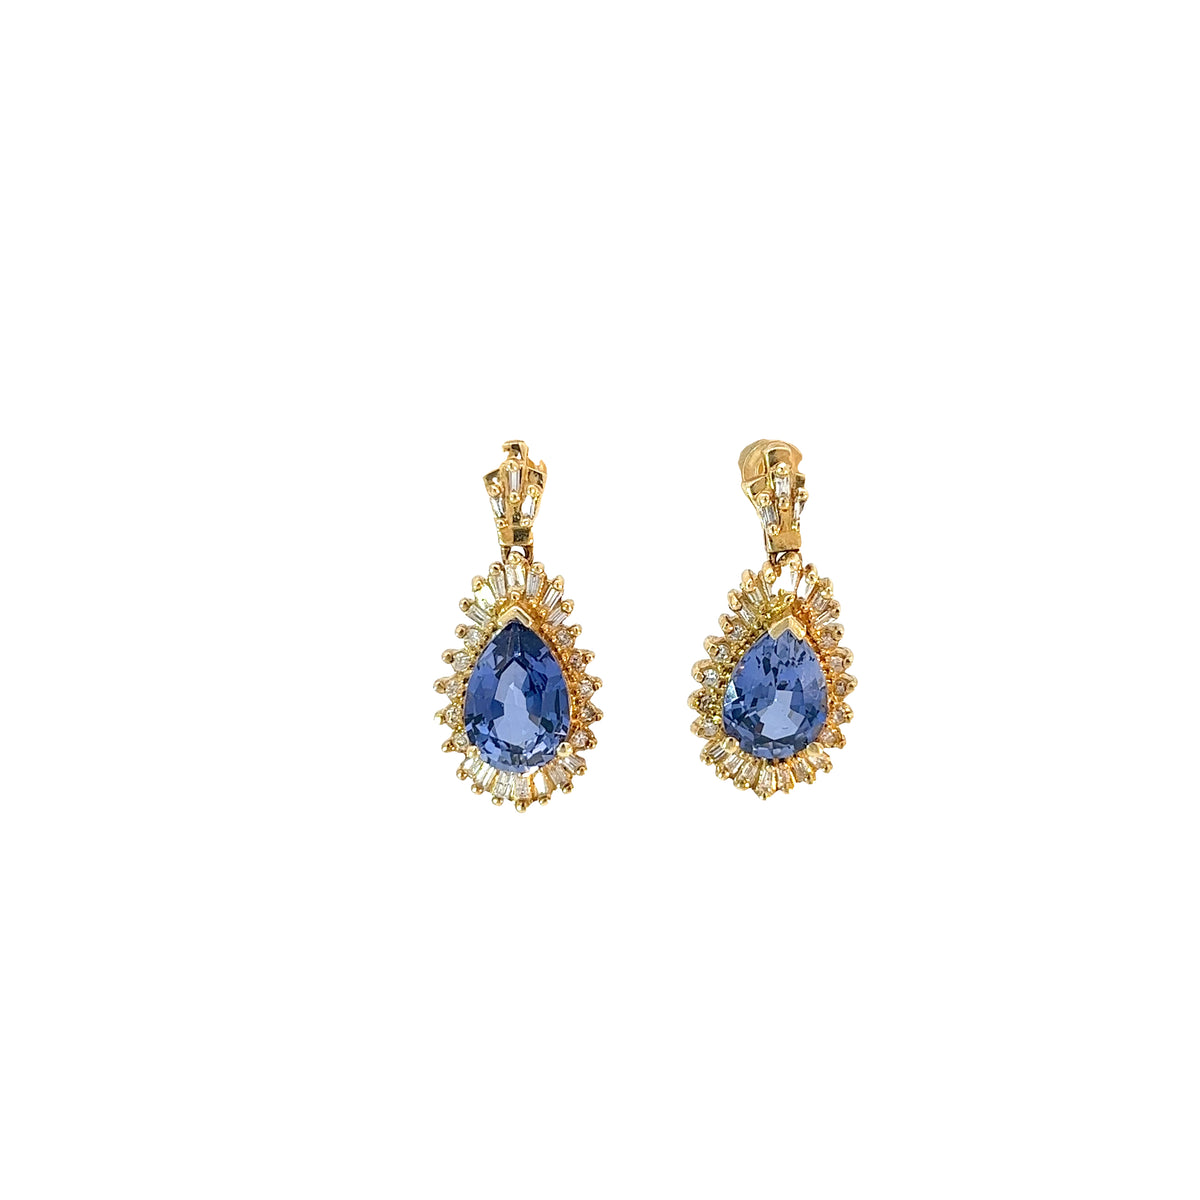 Ladies 18k Yellow Gold Diamond and Tanzanite Drop earrings